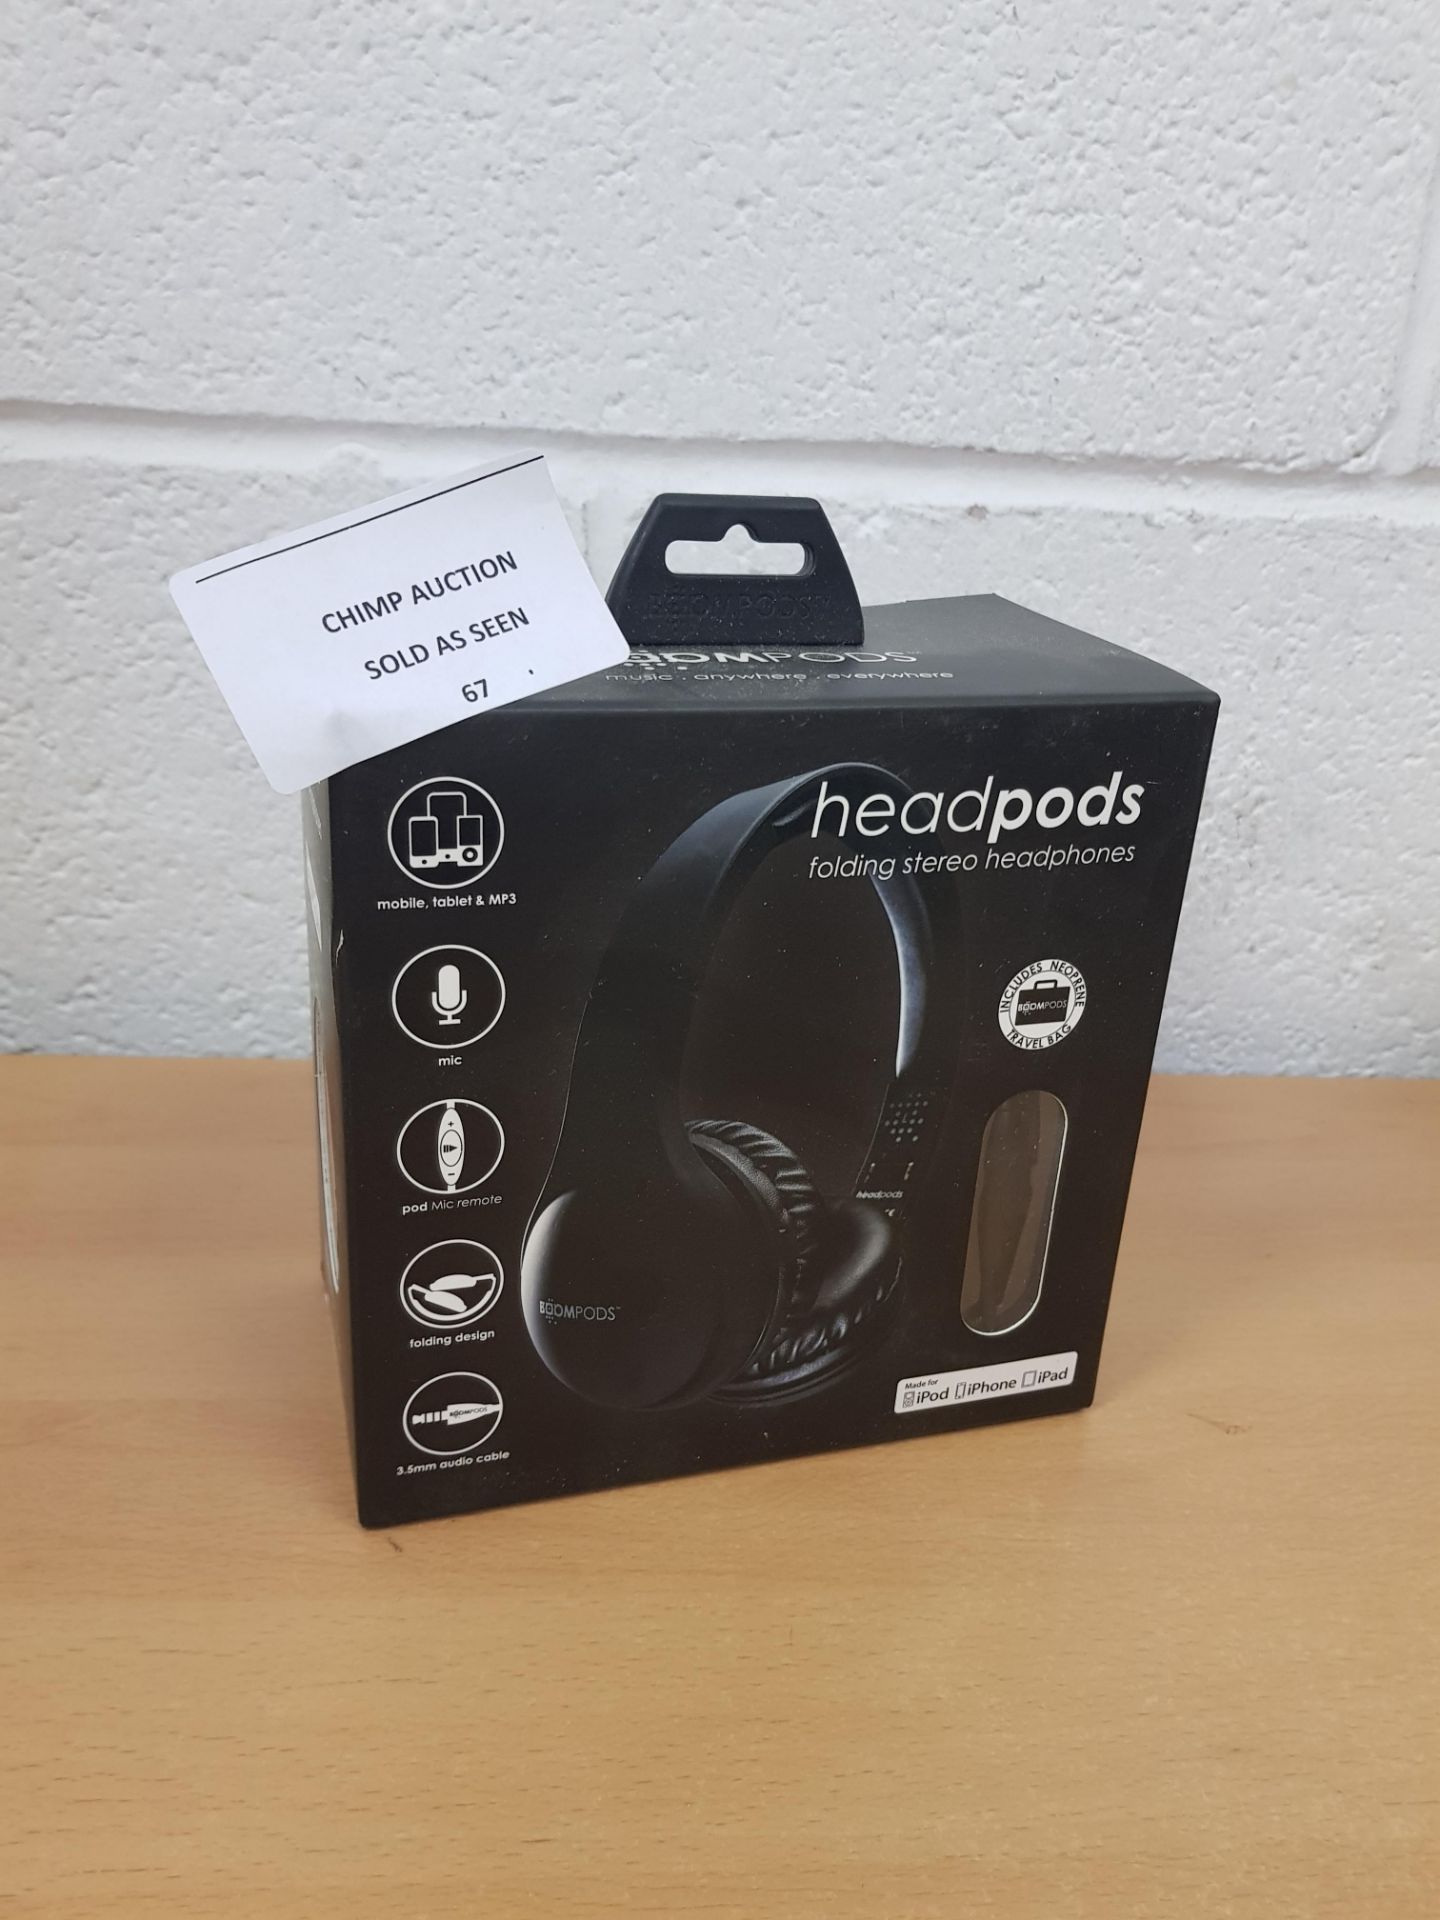 Brand new Boompods Headpods Foldable Headphones RRP £59.99.